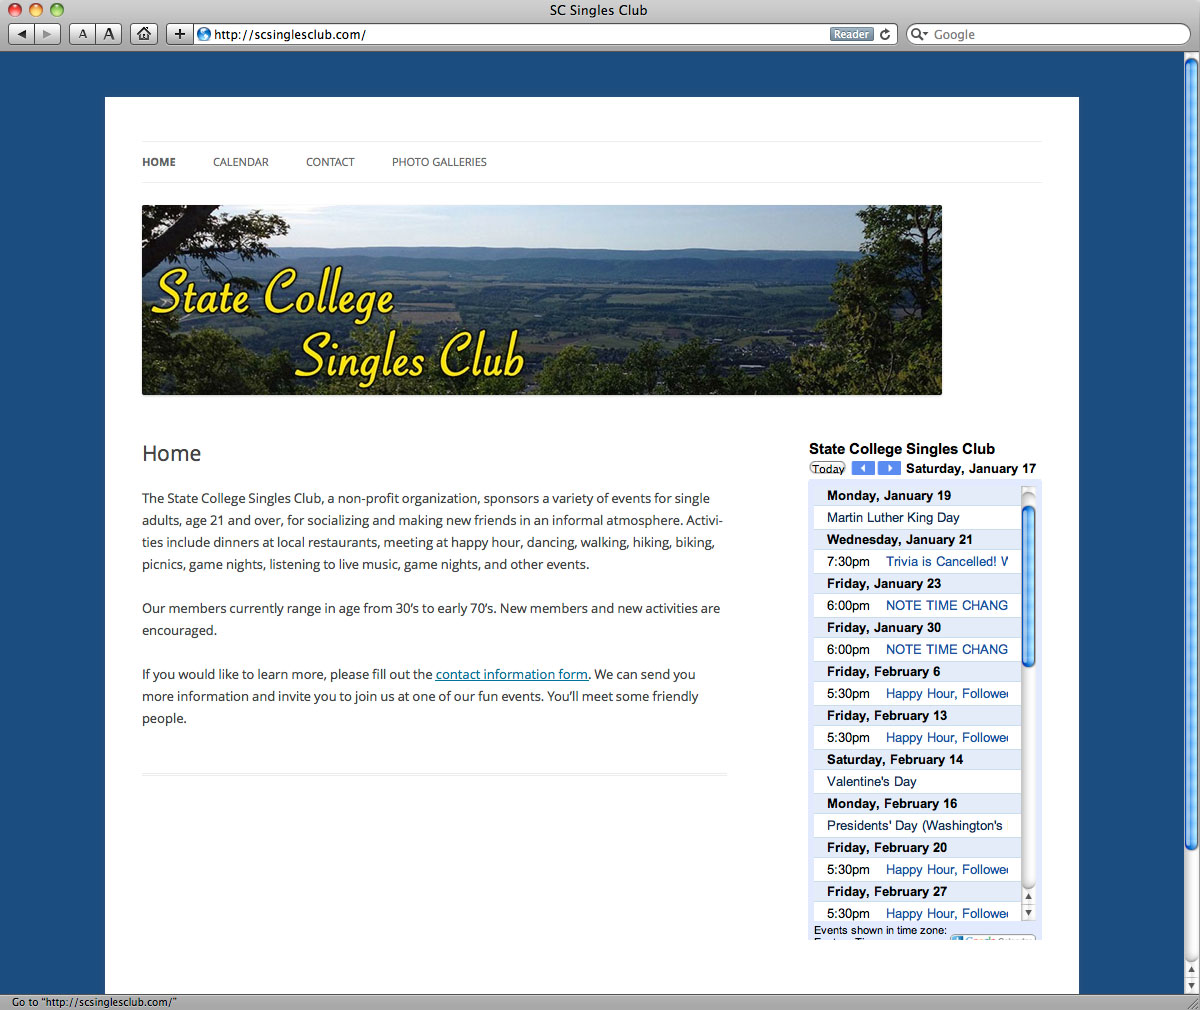 State College Singles Club